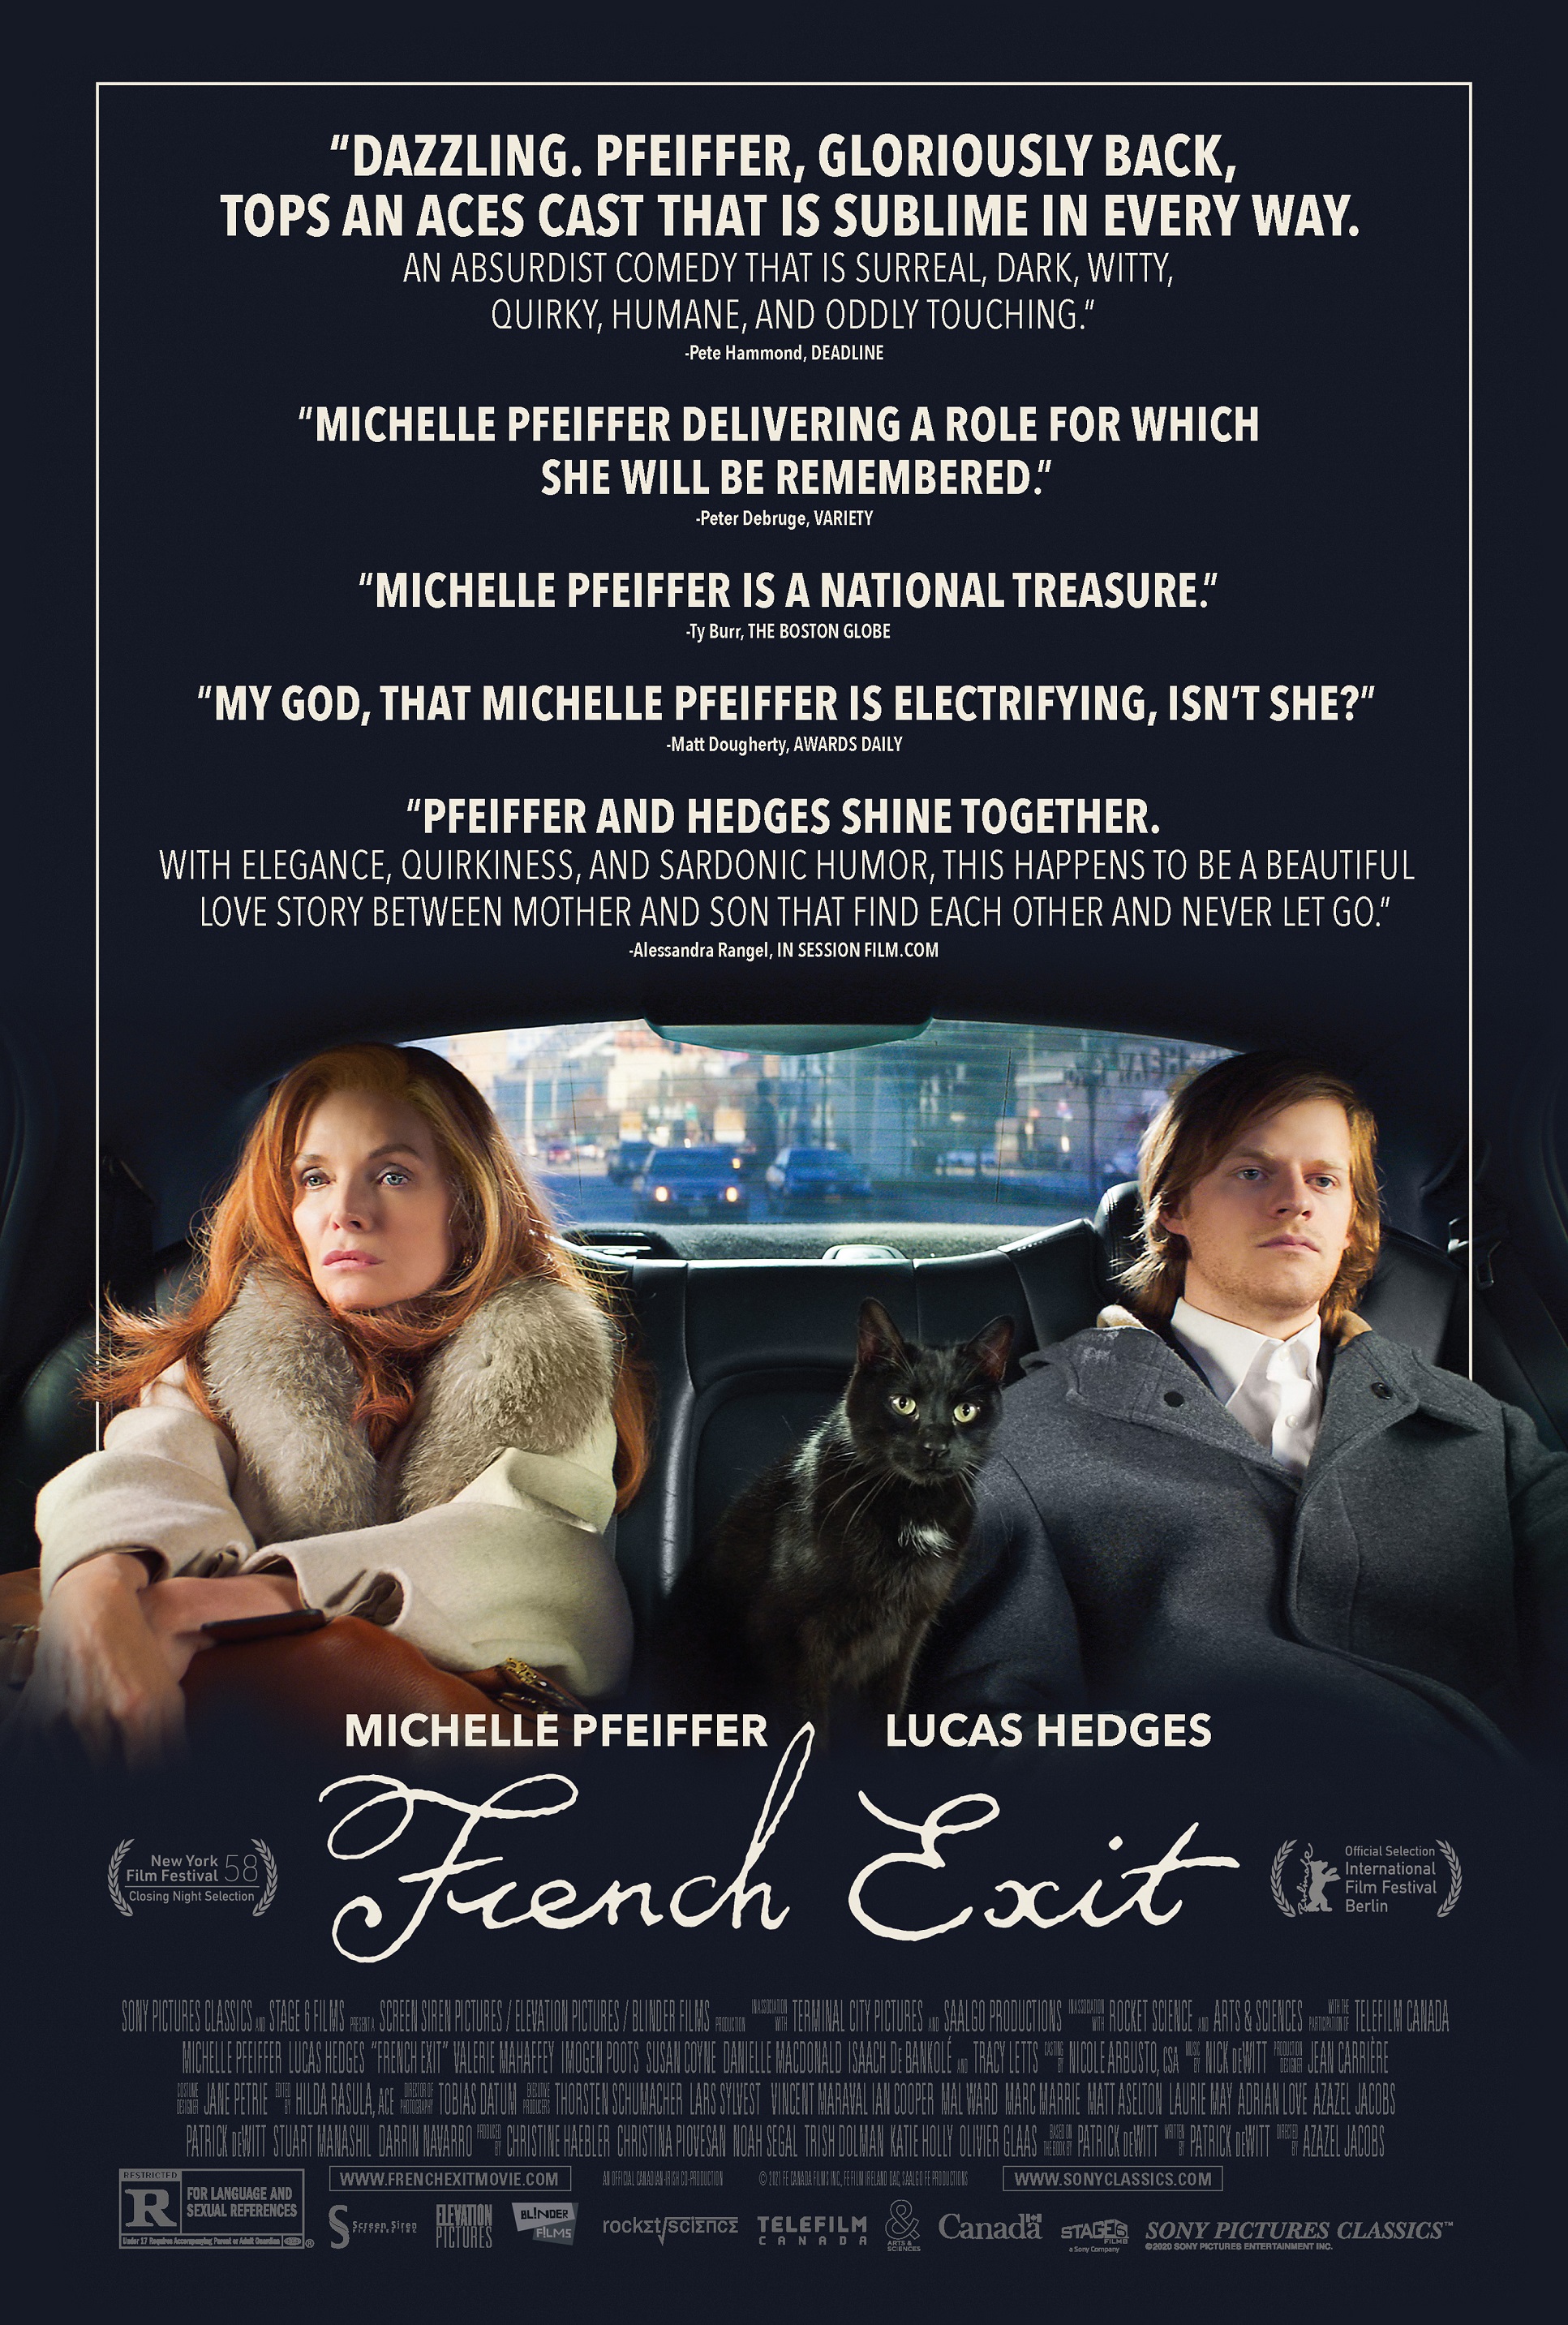 Stiahni si HD Filmy Po francouzsku / French Exit (2020)(CZ/EN)[1080p] = CSFD 51%